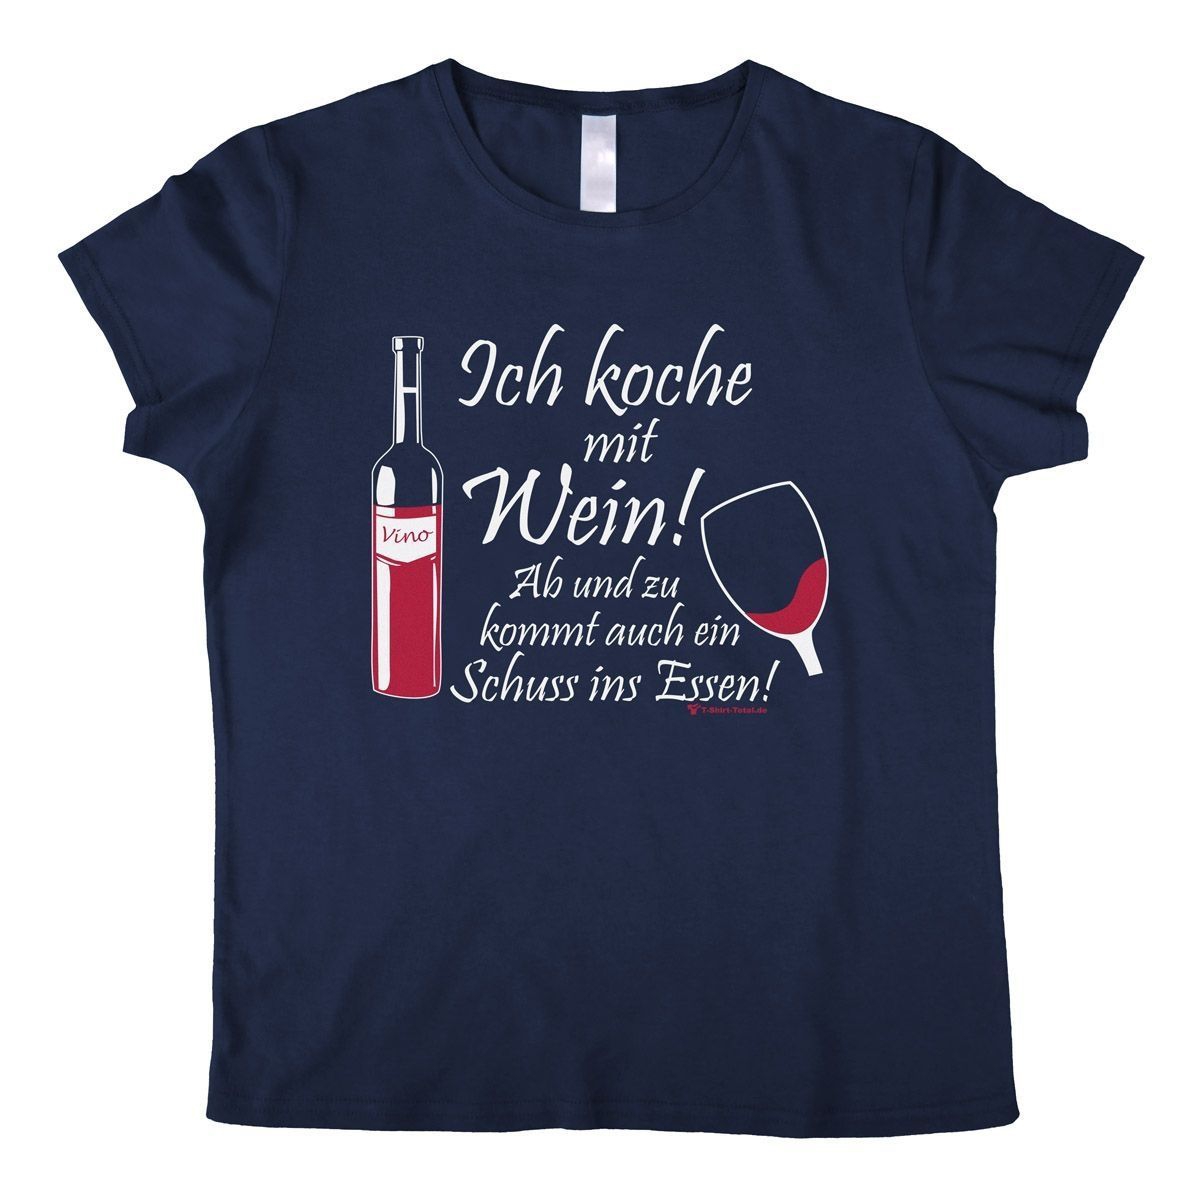 Koche mit Wein Woman T-Shirt navy Large